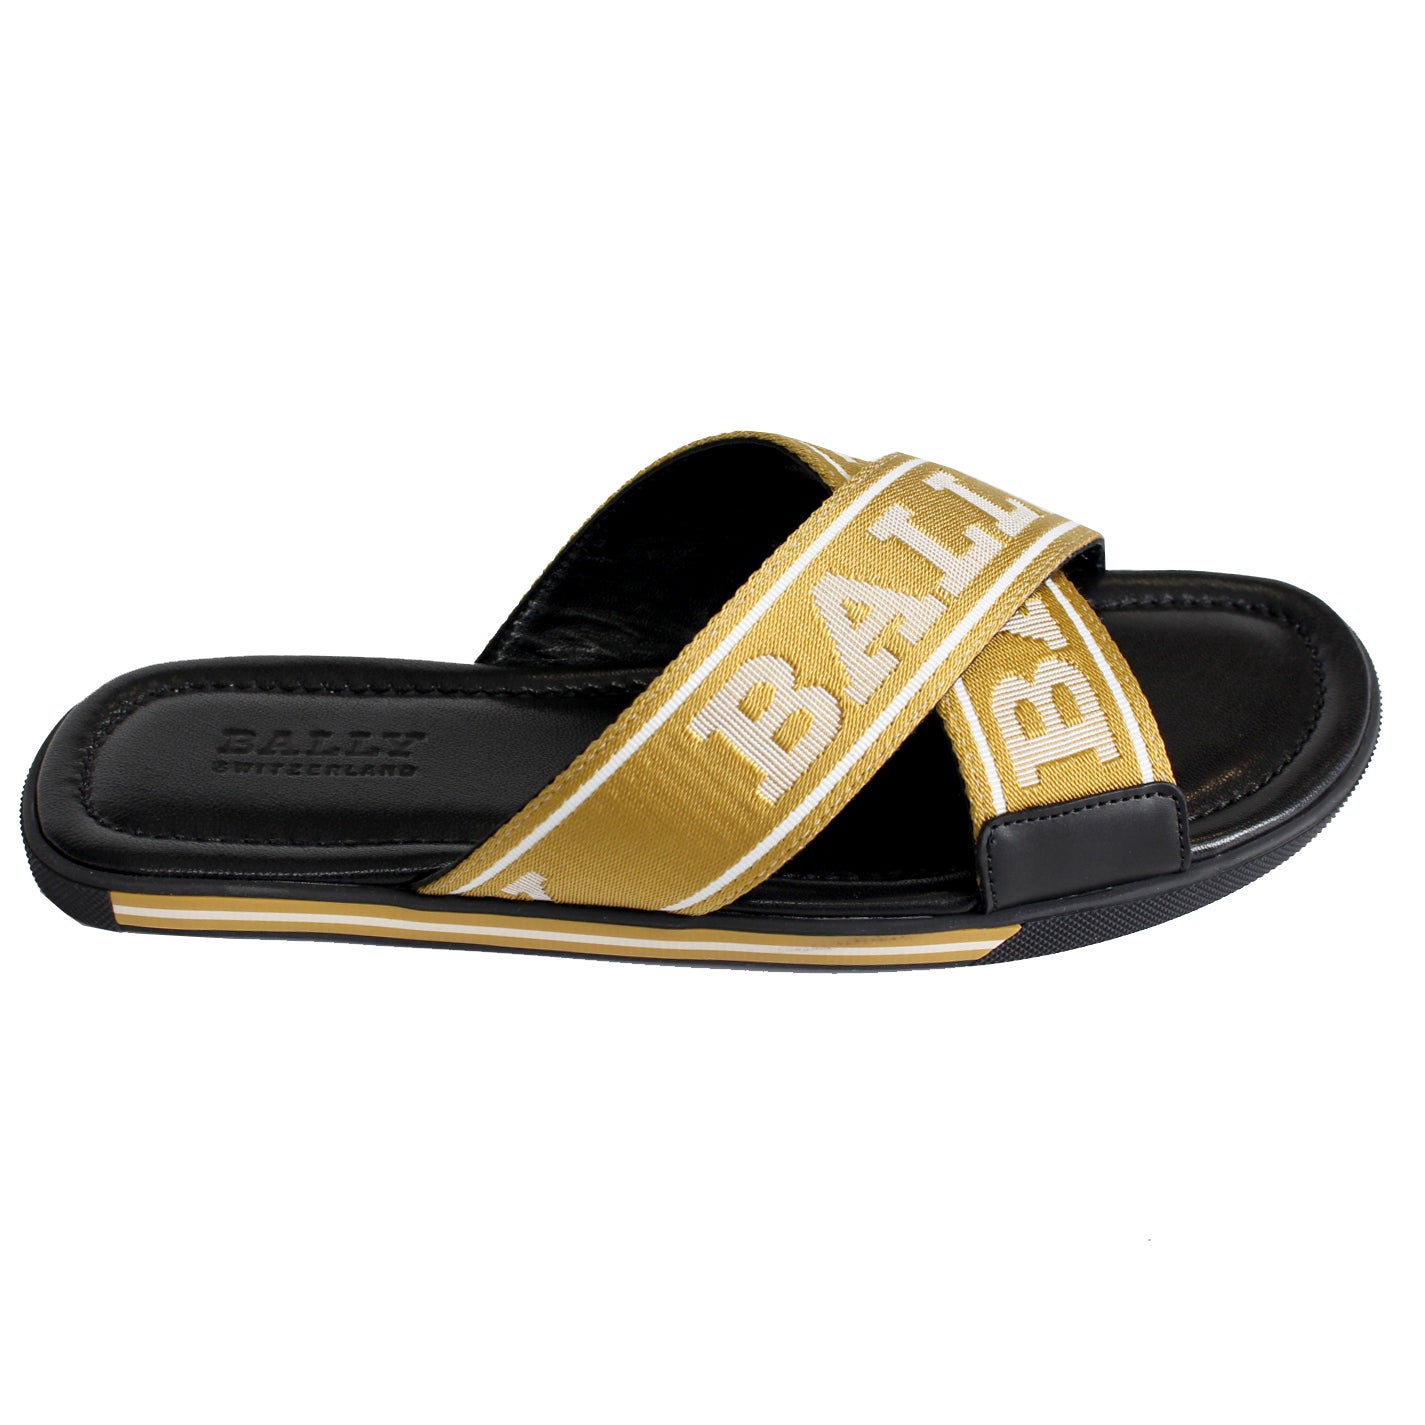 Men's Bonks Sandals-Gold